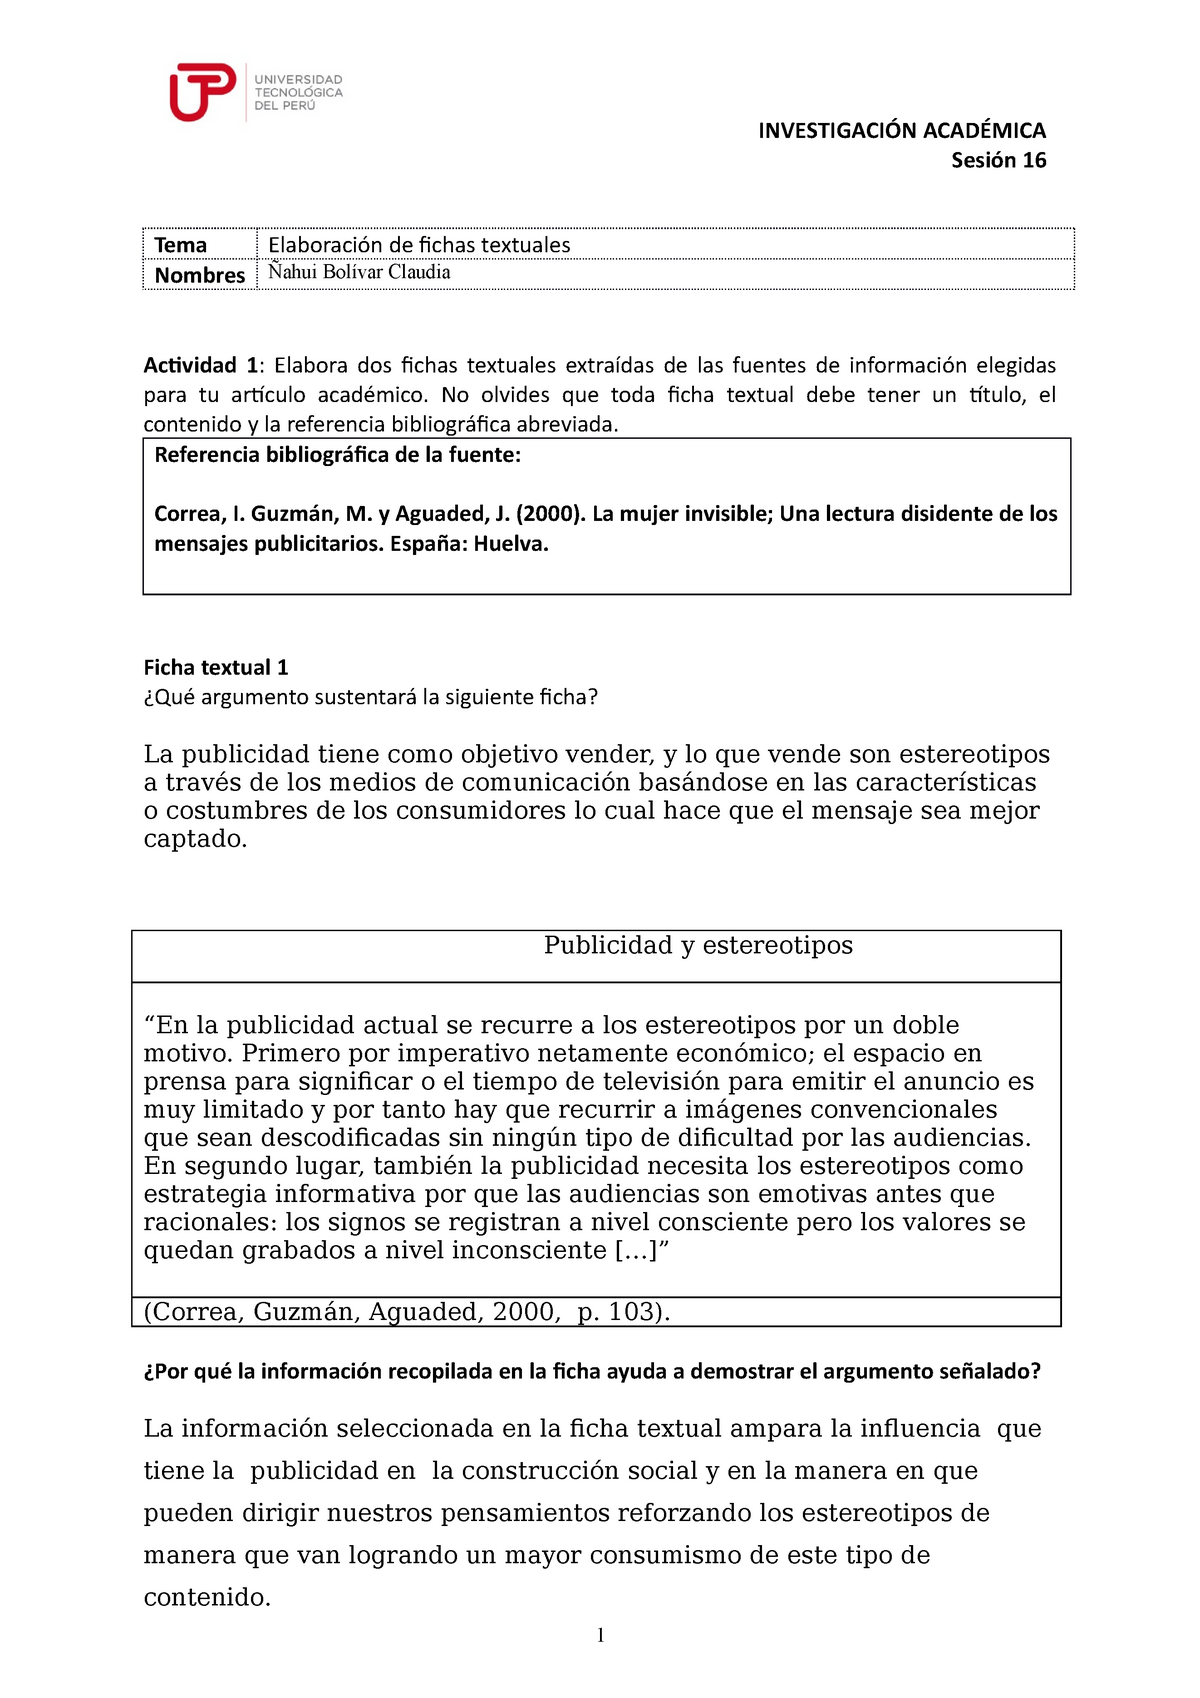 Ficha textual terminada - INVESTIGACIÓN ACADÉMICA Sesión 16 Tema  Elaboración de fichas textuales - Studocu